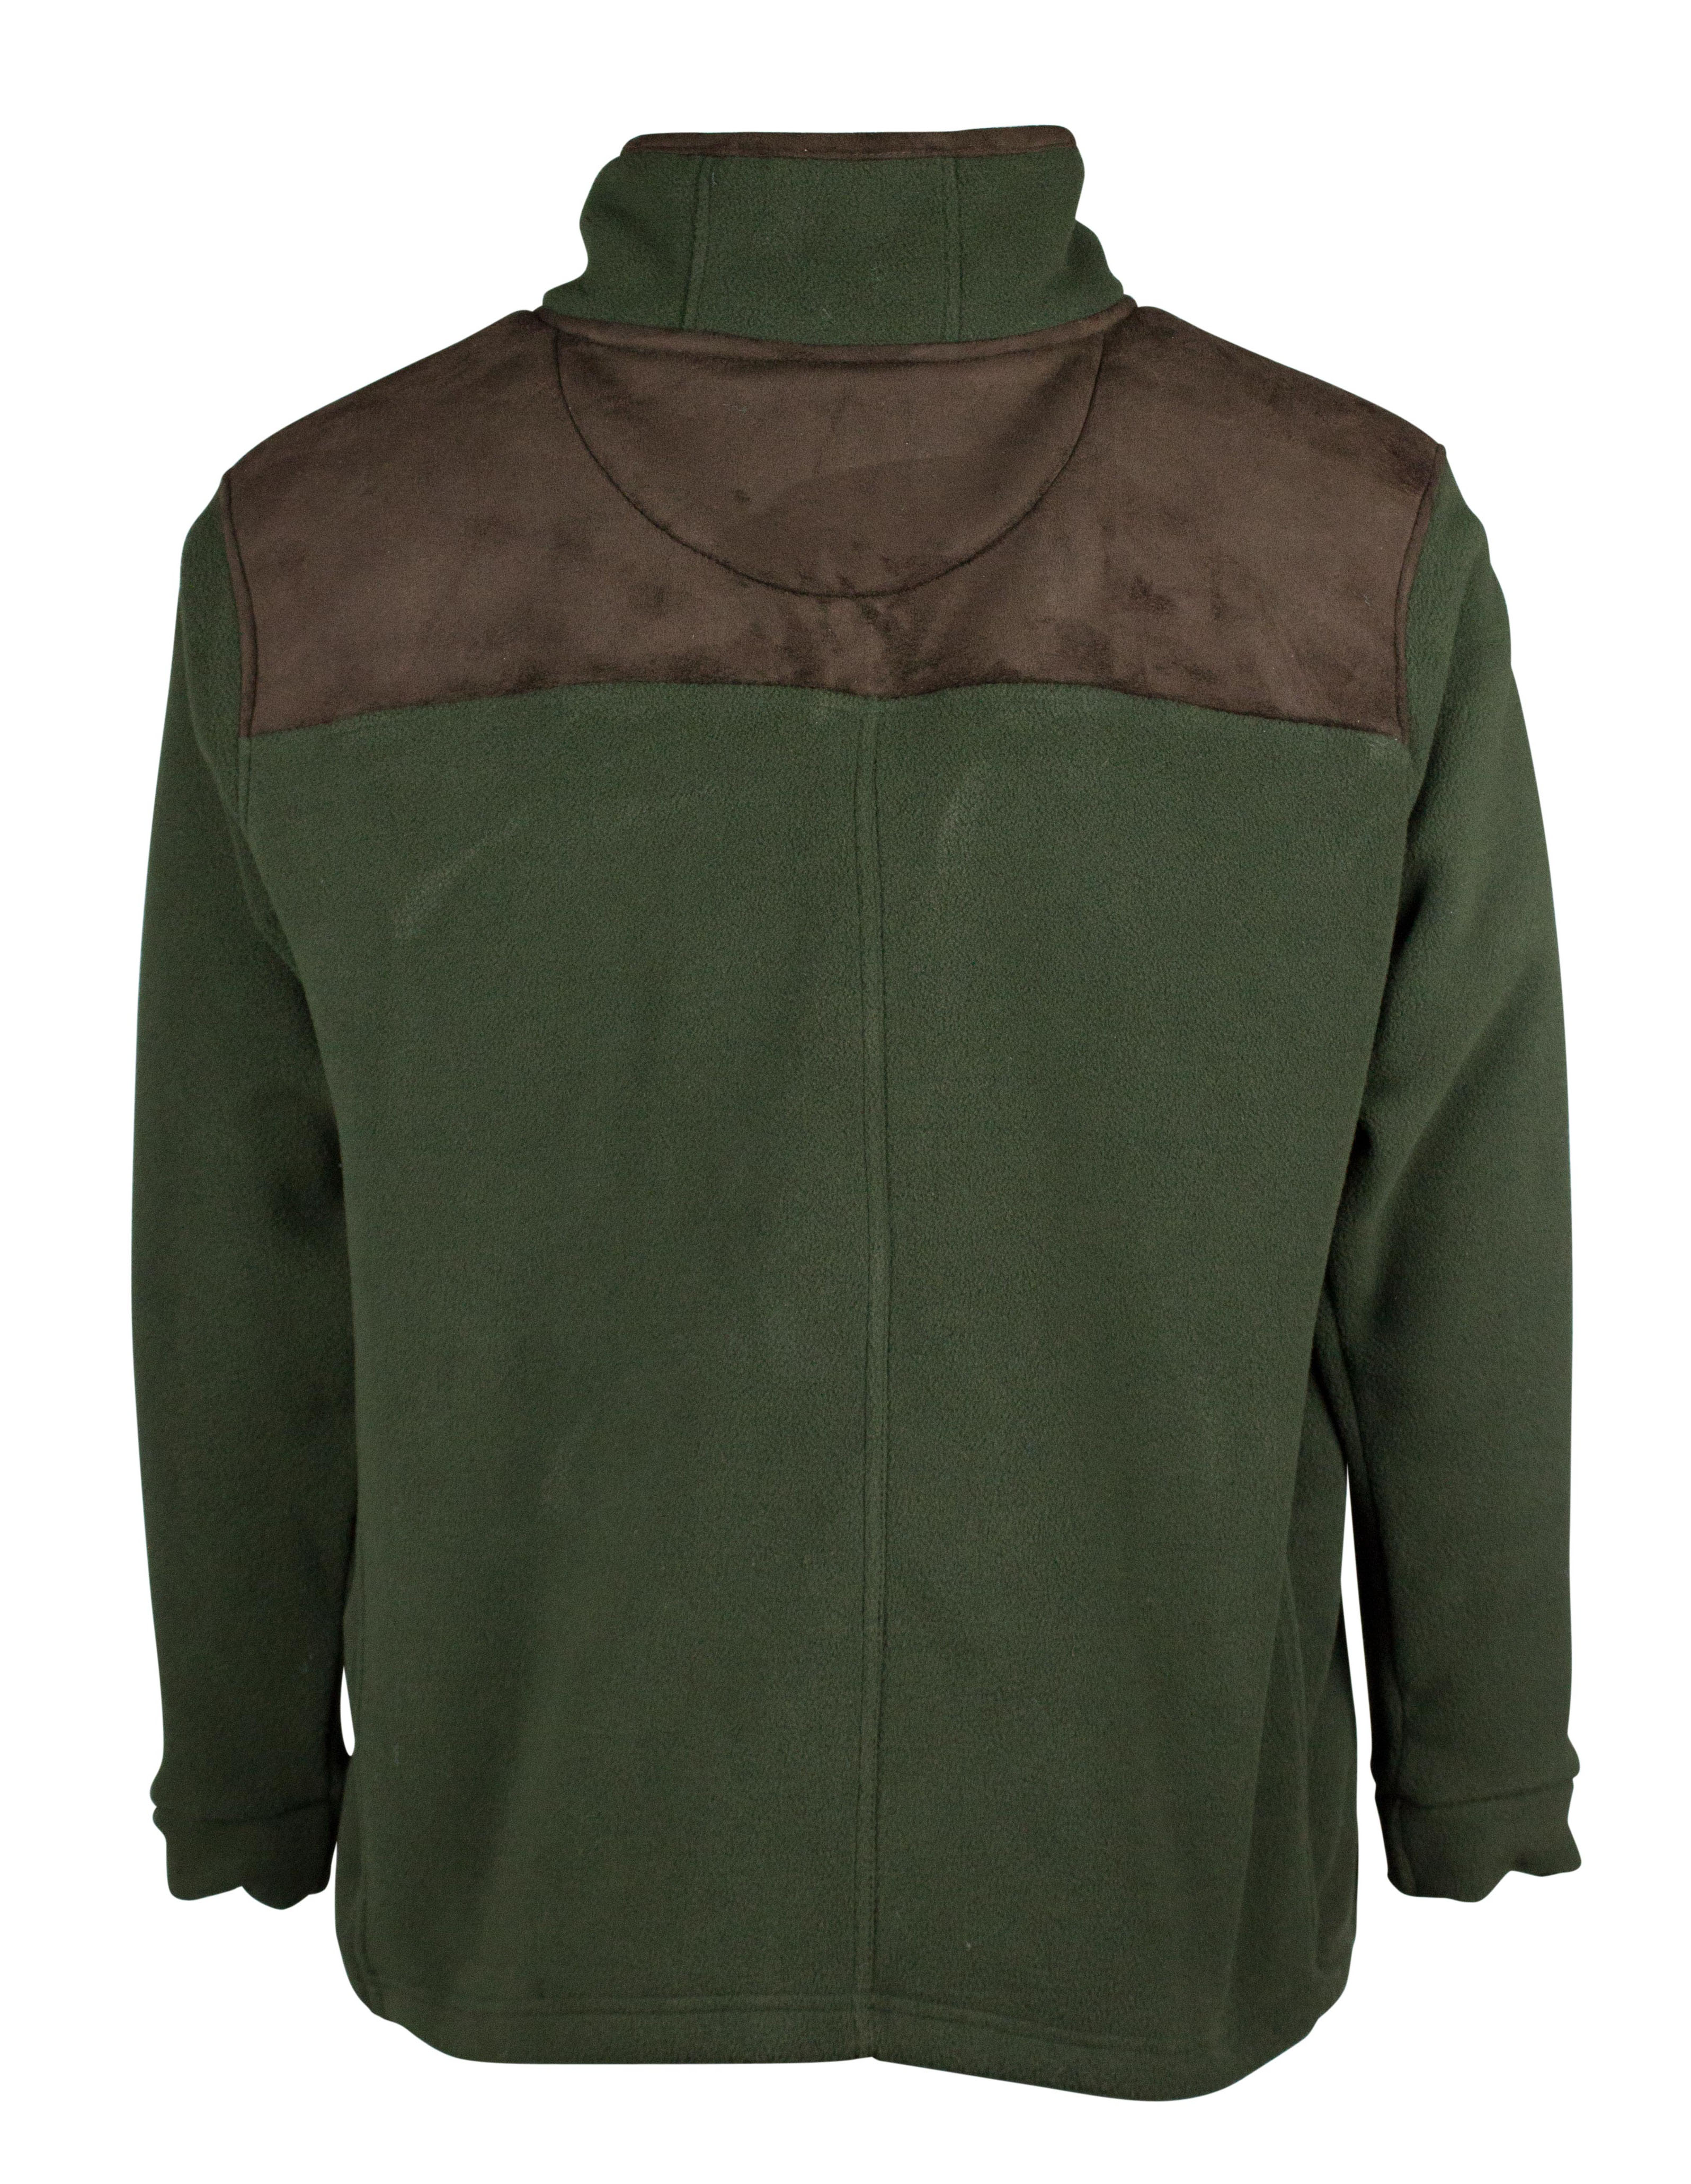 MF105 - Mens Bonded Full Zip Fleece Jacket - GREEN - Oxford Blue